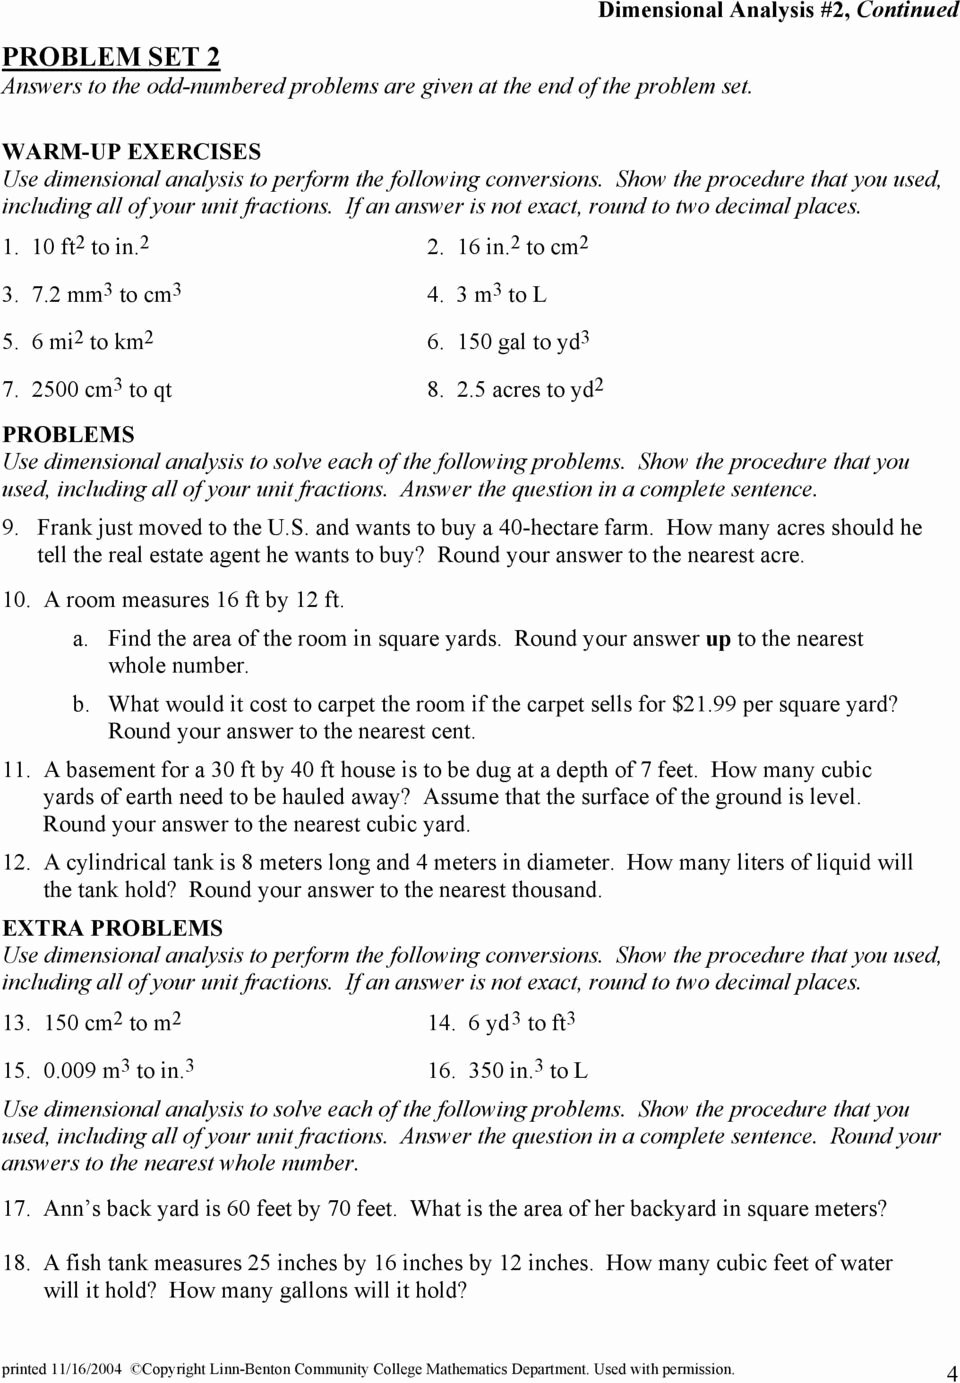 Dimensional Analysis Worksheet 2